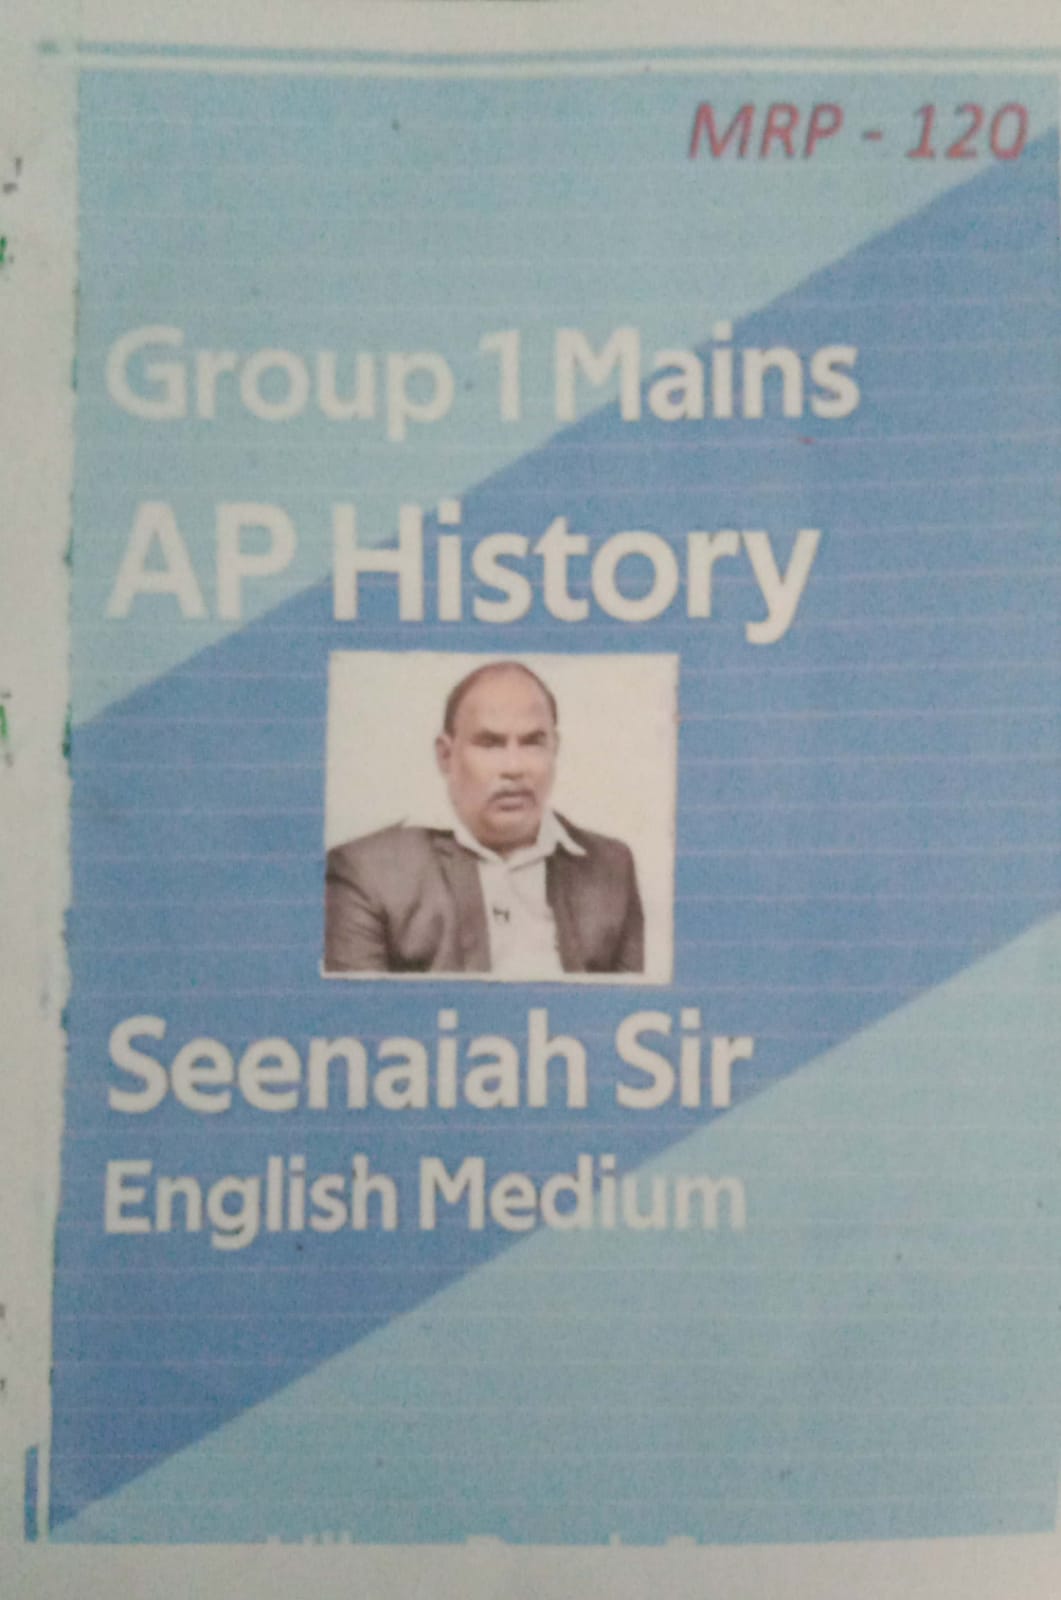 AP HISTORY GROUP 1 MAINS SEEINAIAH SIR CLASS NOTES XEROX [ENGLISH MEDIUM] XEROX PRINTED MATERIAL